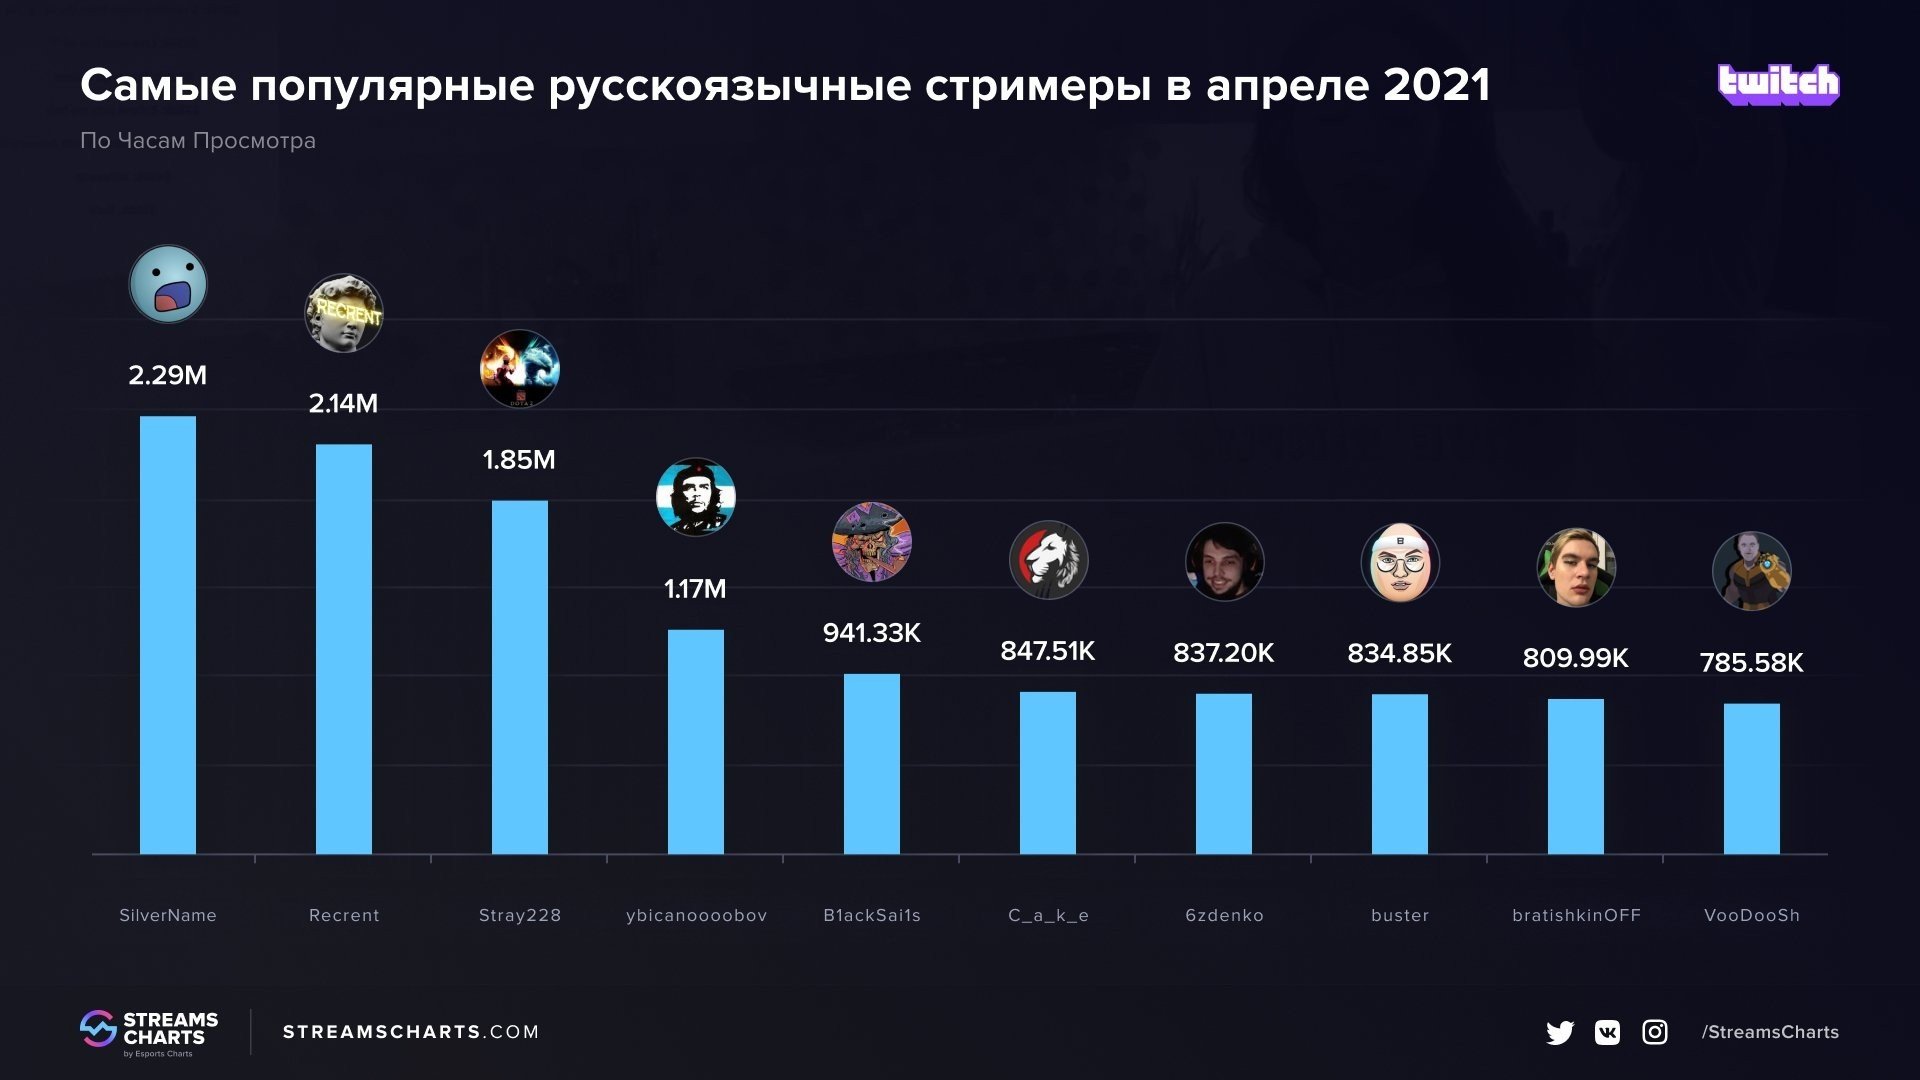 Silvername стал самым популярным русскоязычным стримером апреля